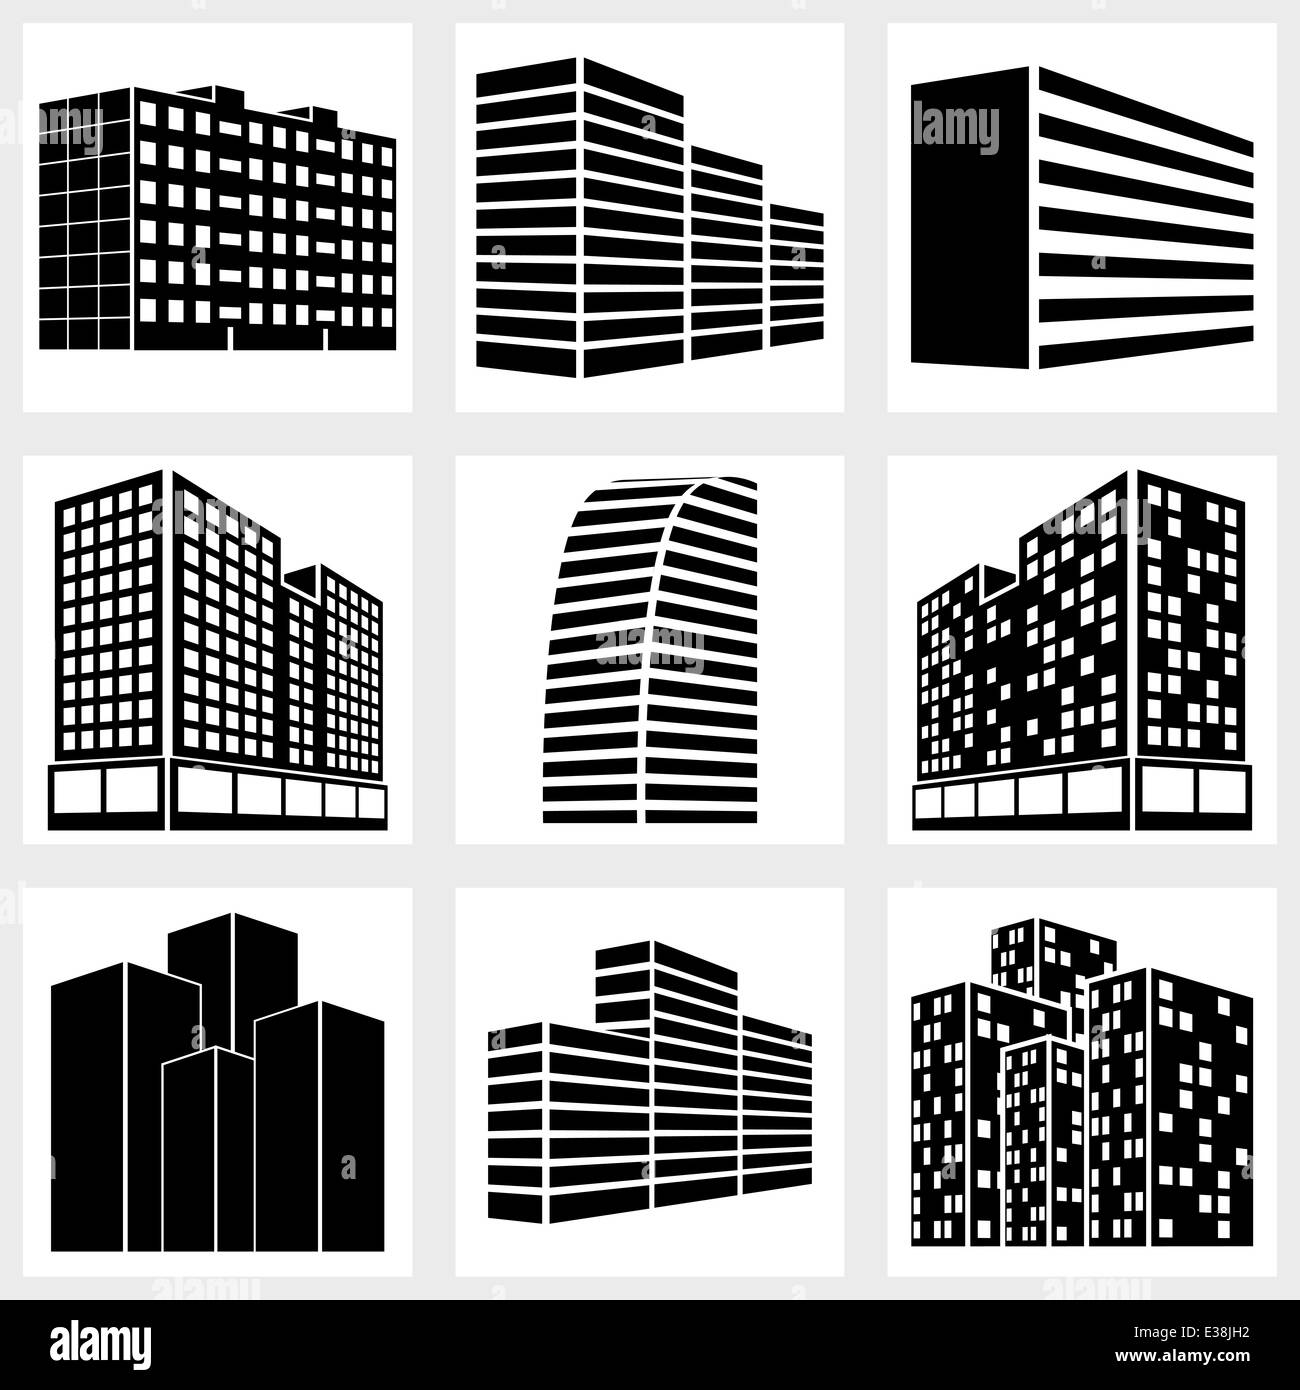 Buildings icons Stock Photo